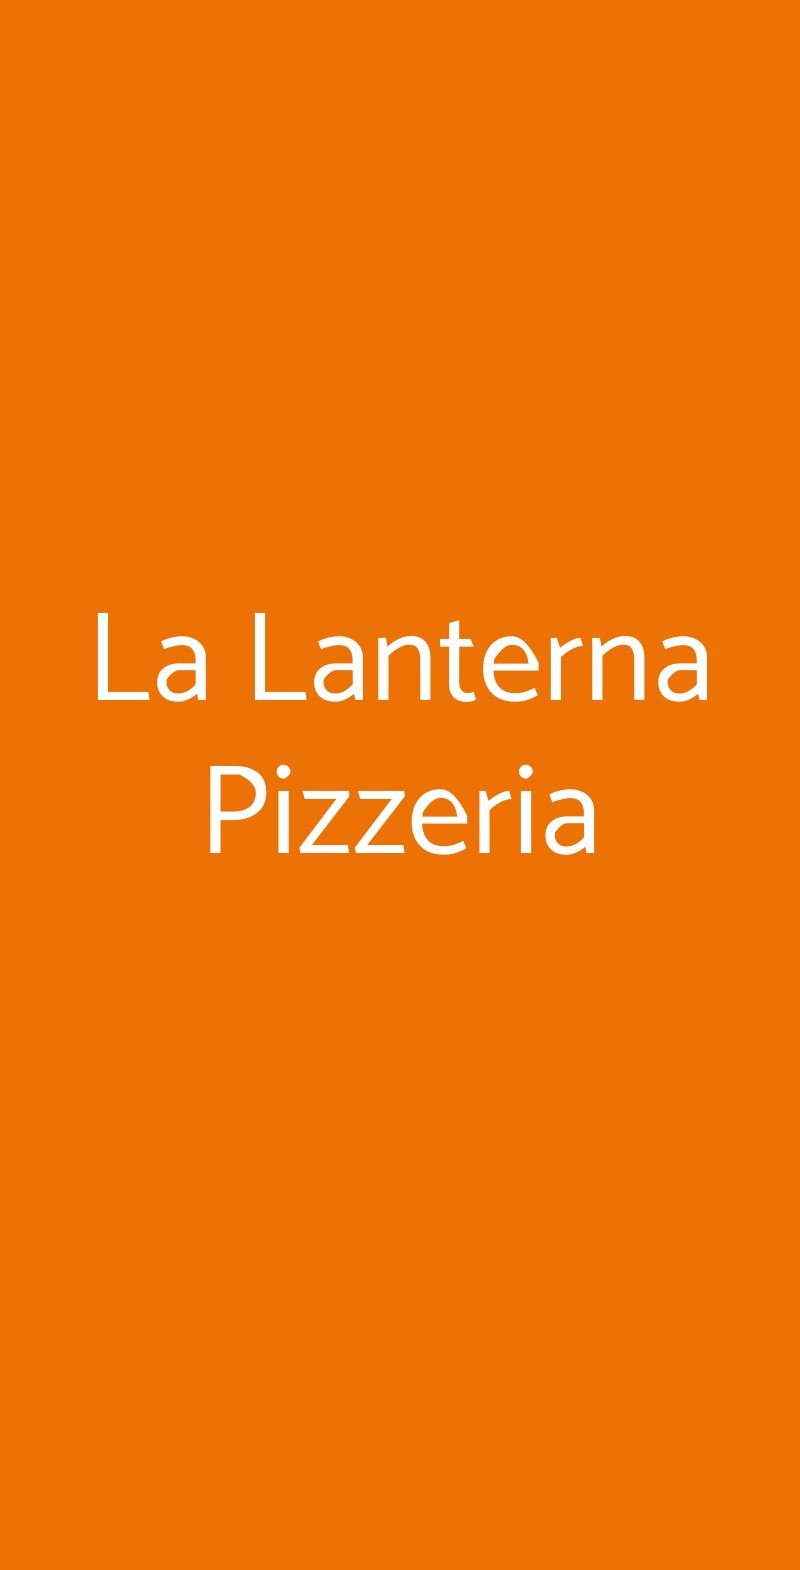 La Lanterna Pizzeria Roma menù 1 pagina